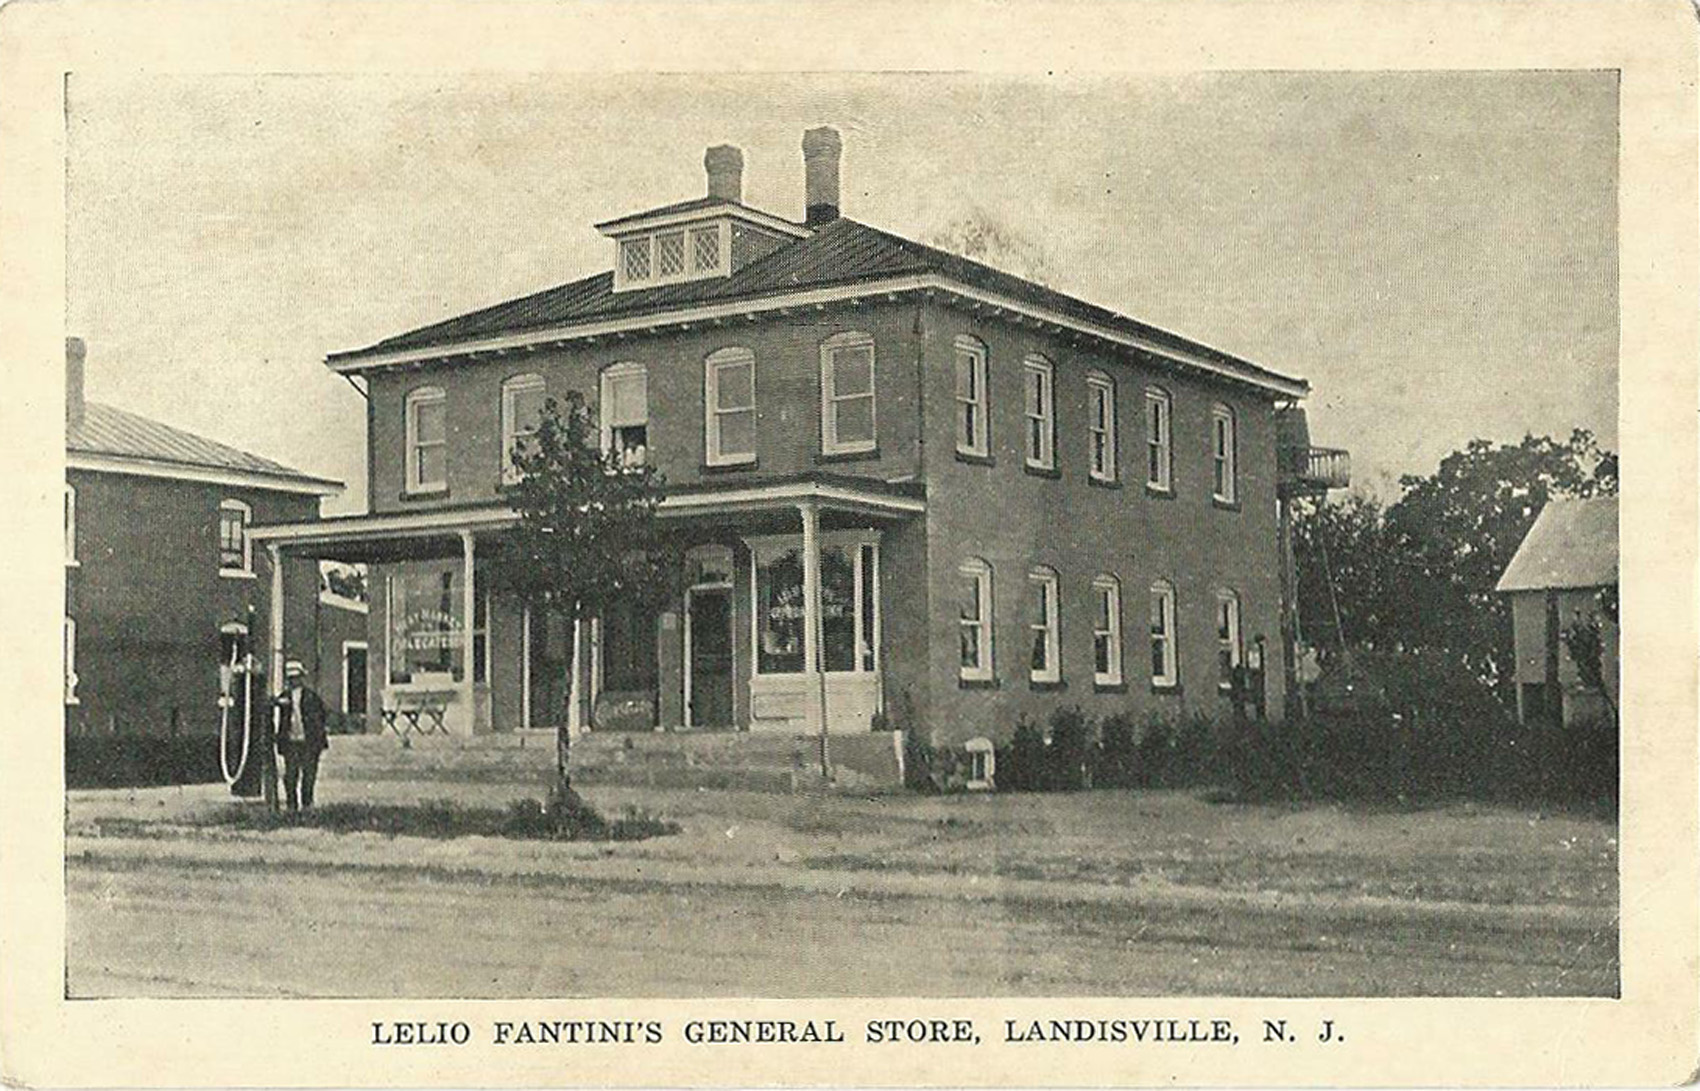 Landisville - Seller say Buena Borough - Lello Pantinis General Store - c 1910s